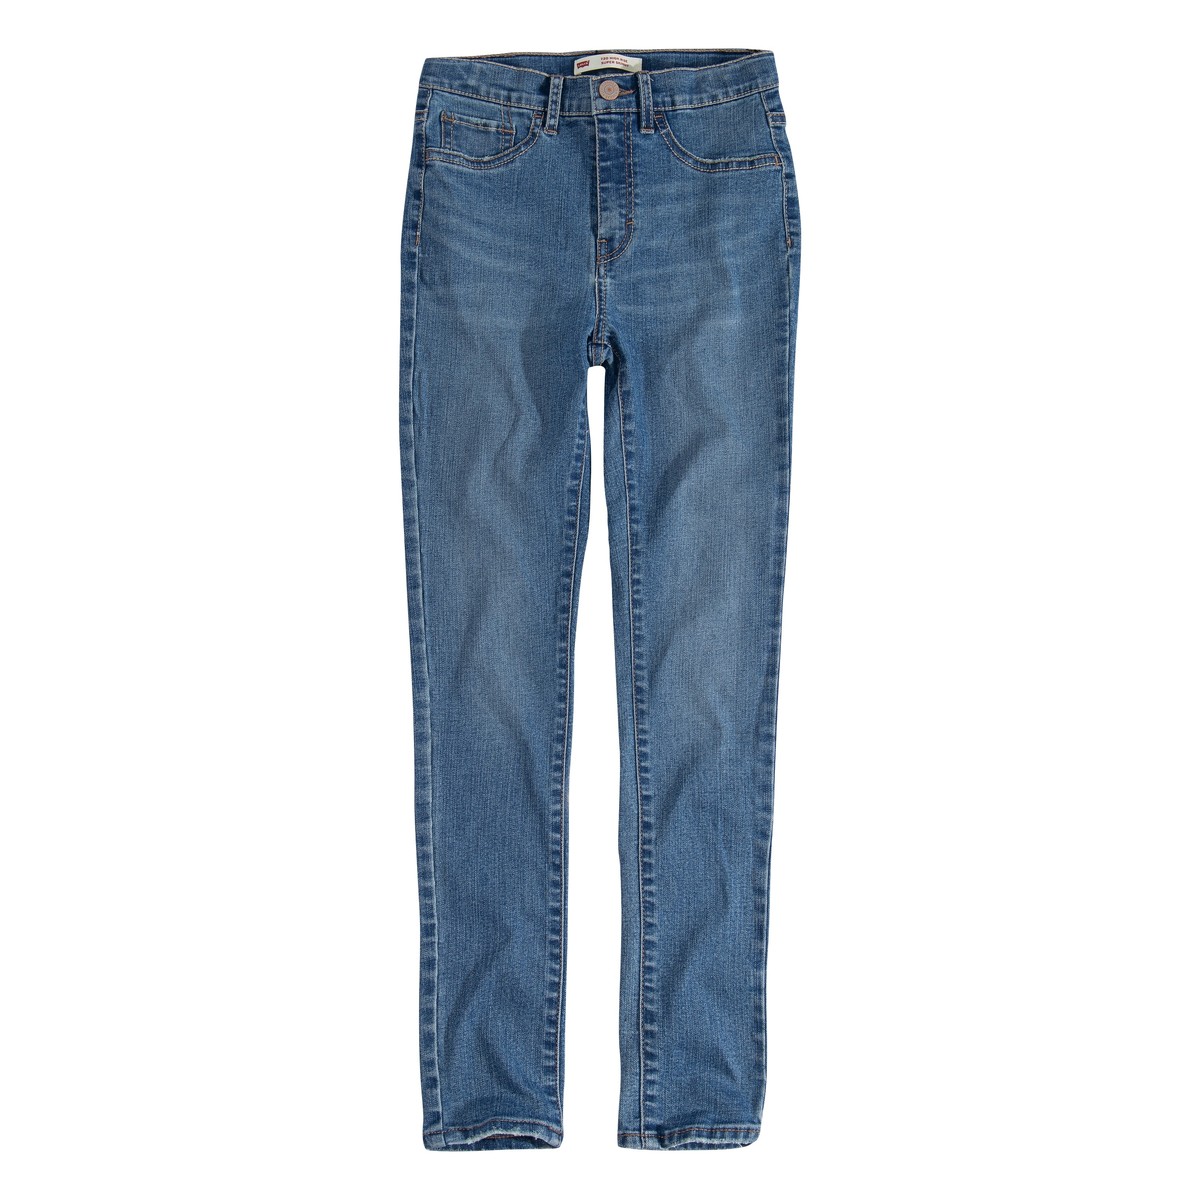 Skinny jeans Levis 721 HIGH RISE SUPER SKINNY